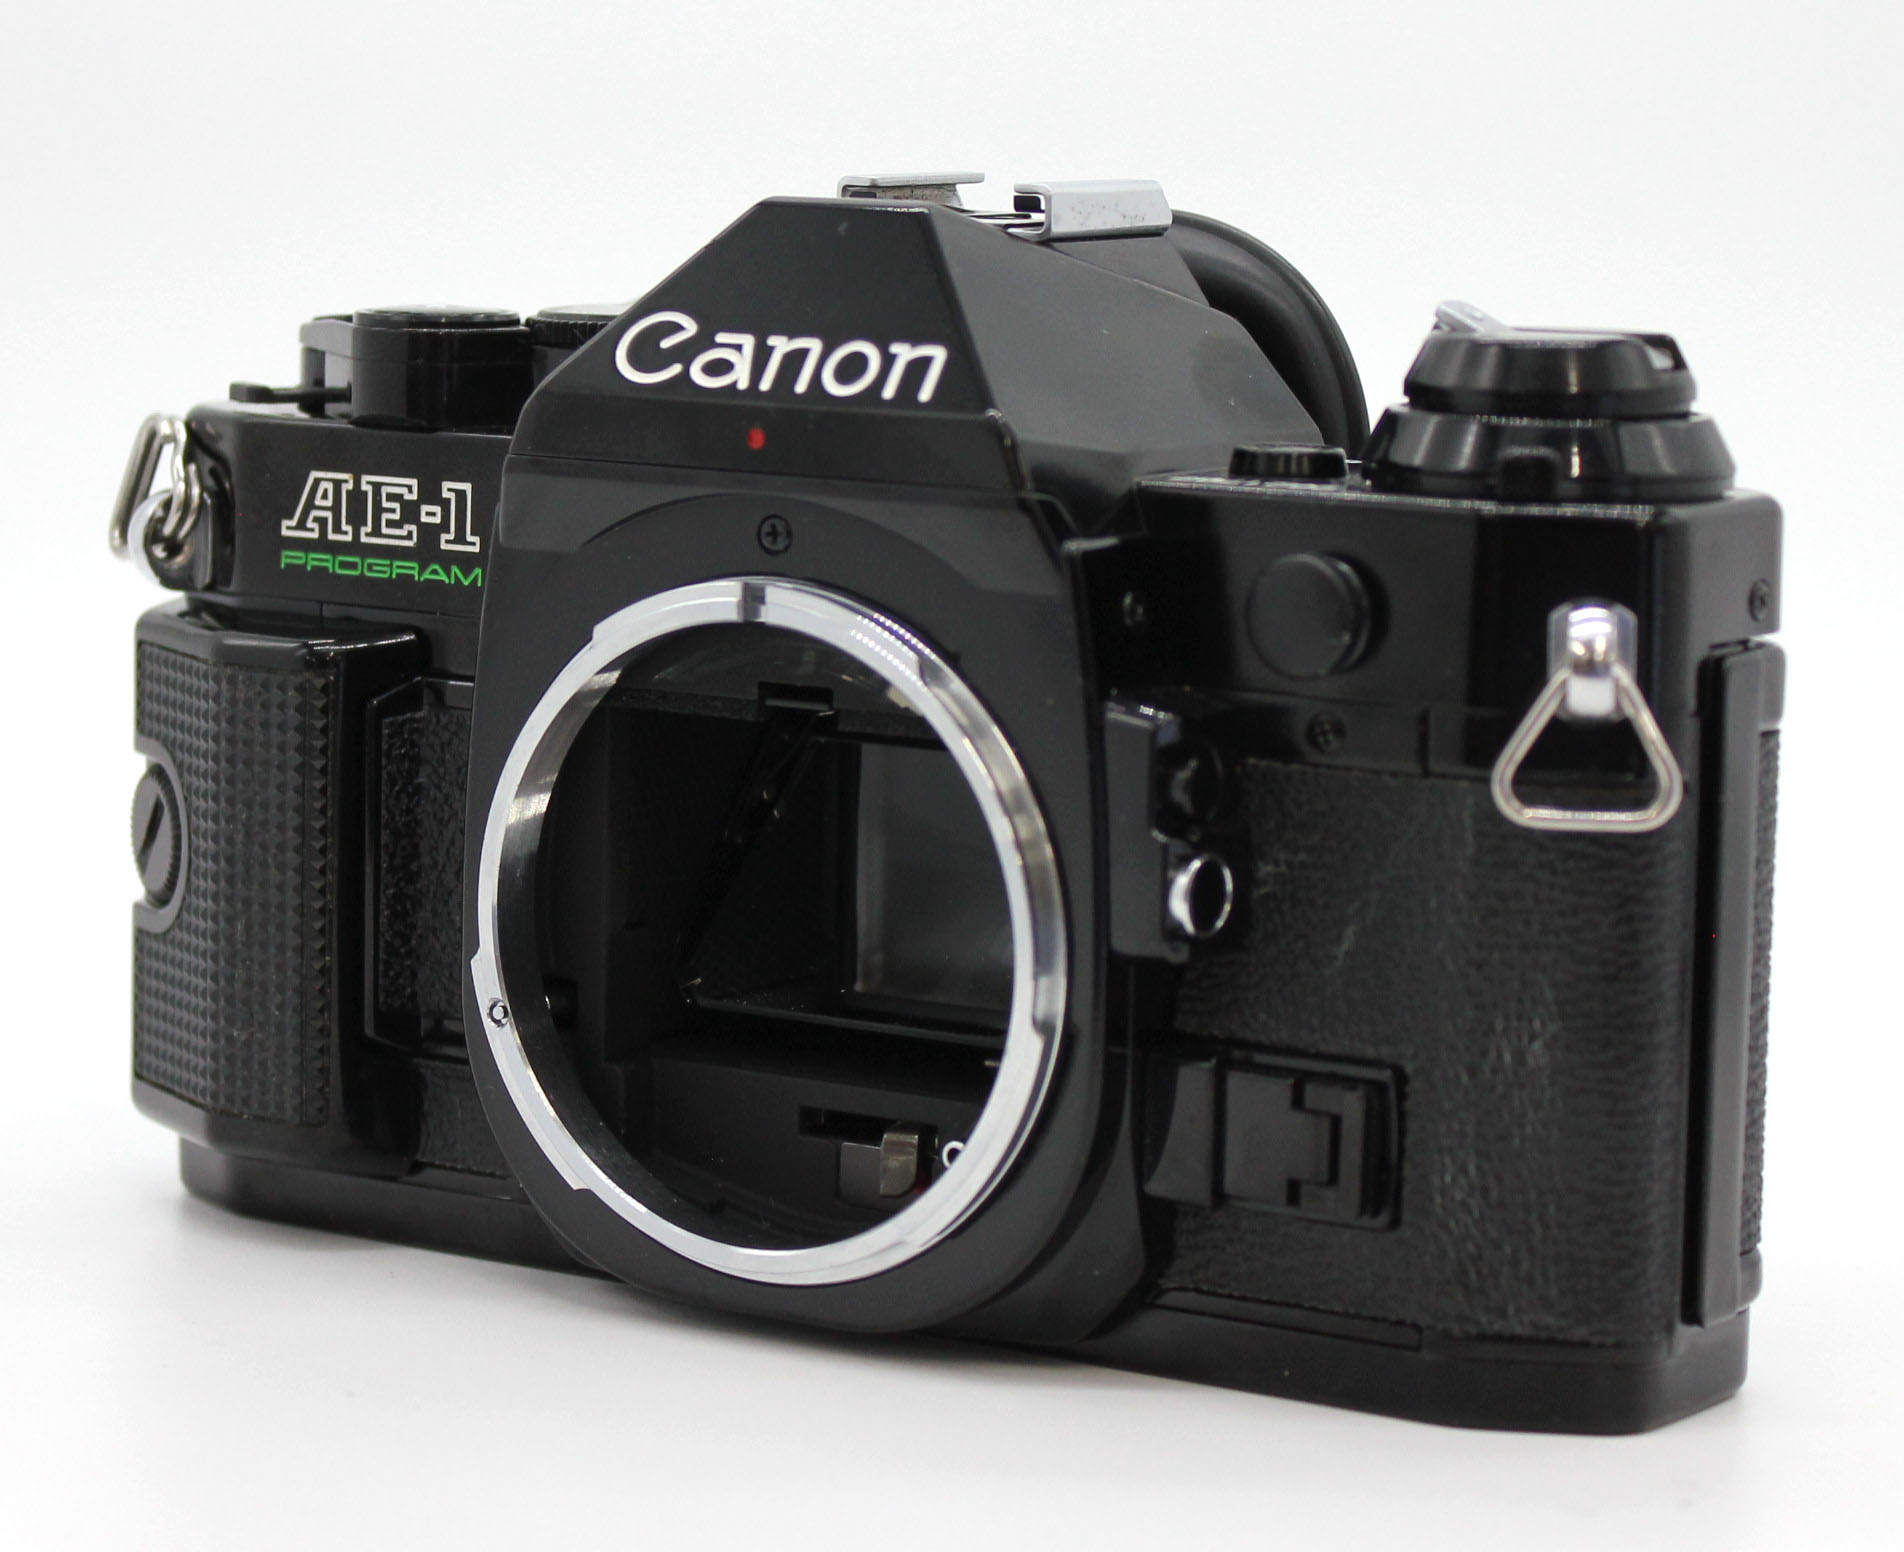 Canon AE-1 Program 35mm SLR Film Camera Black [AS IS / FOR REPAIR] 